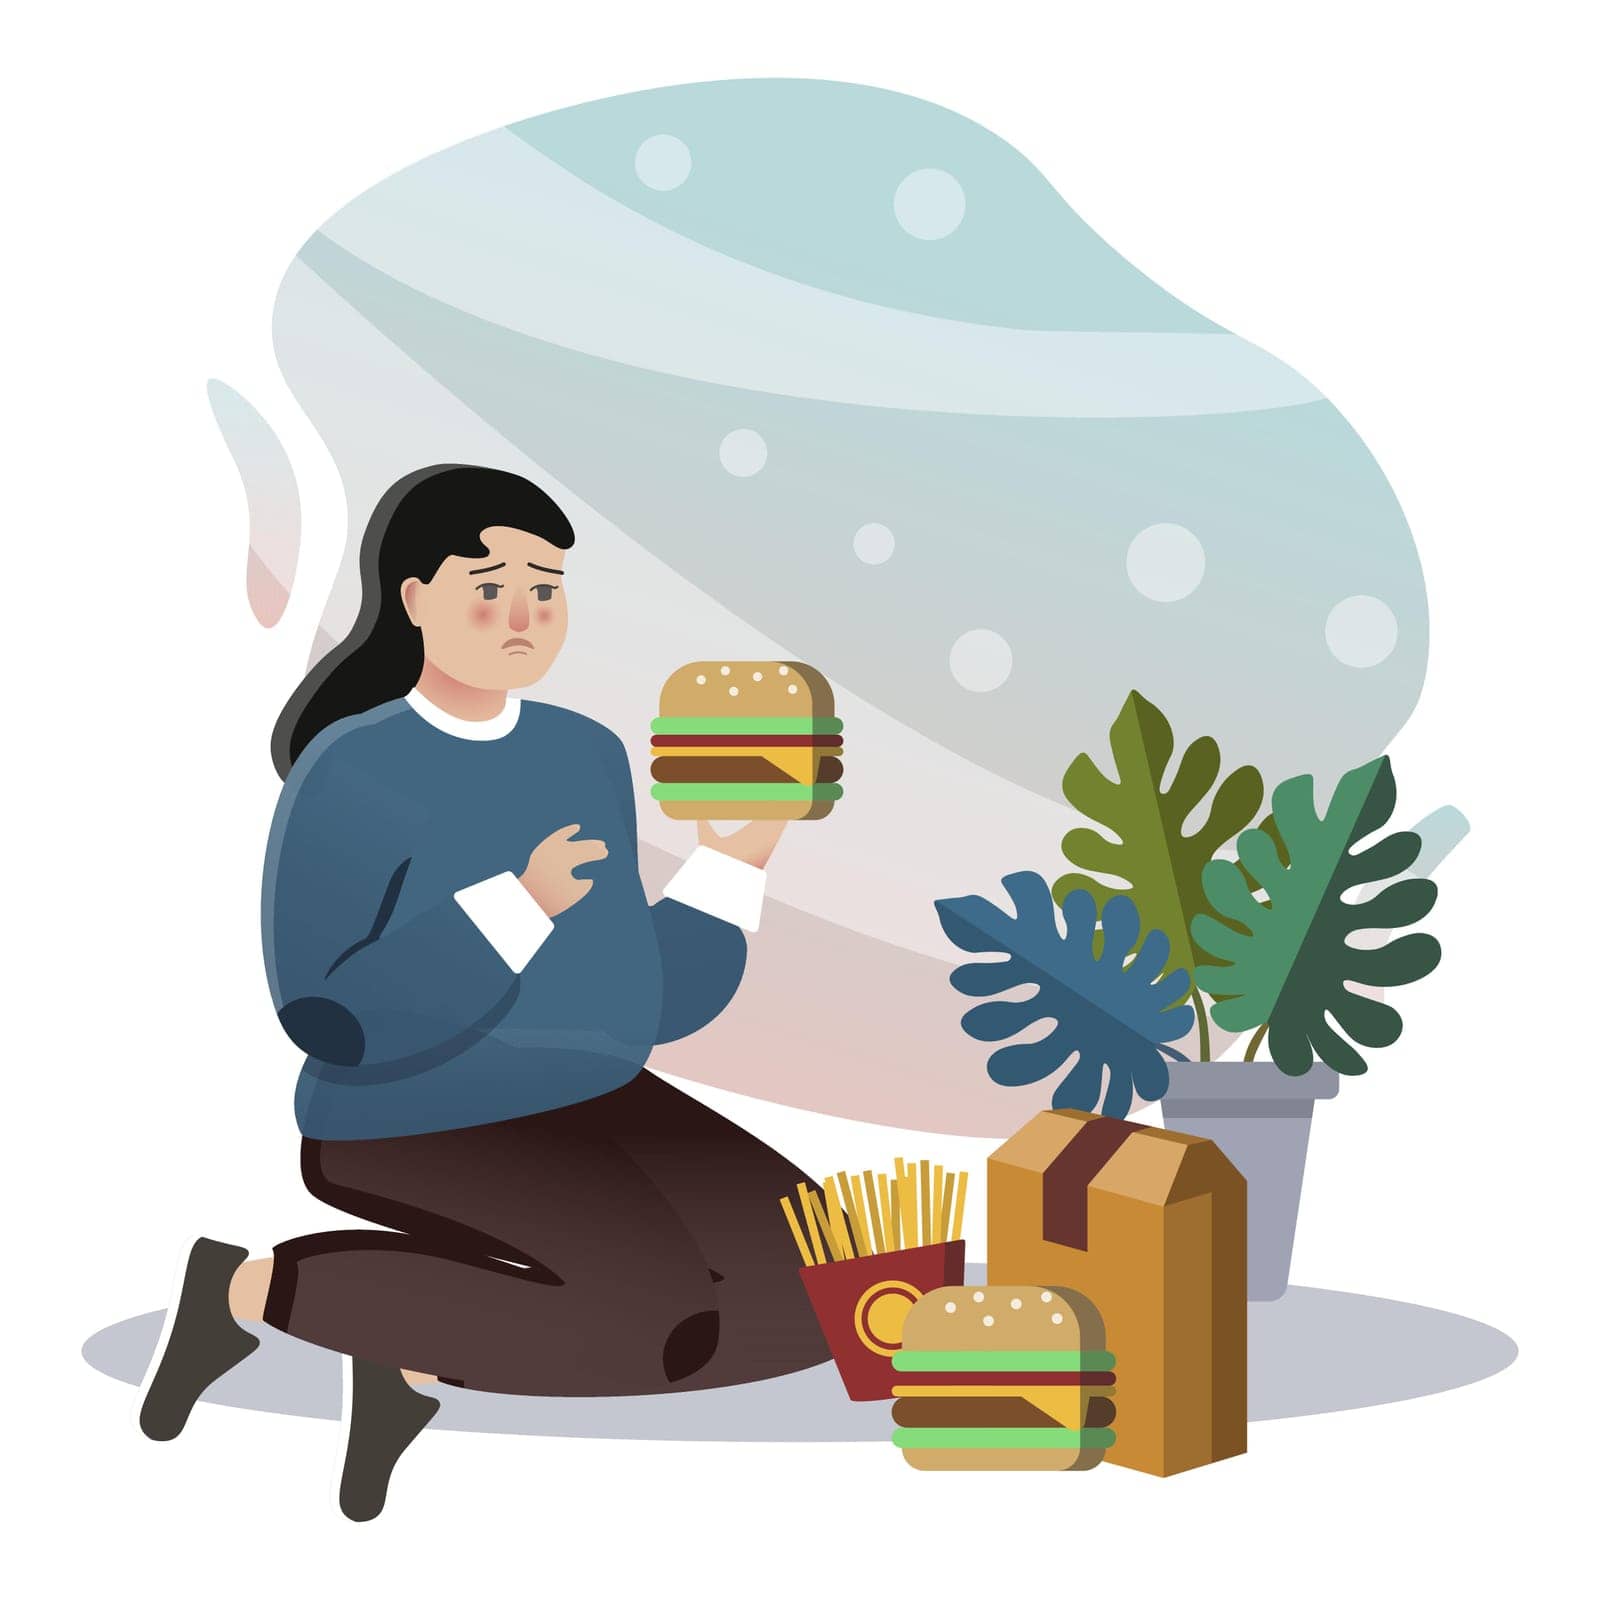 Bulimia illustration. Girl, burger, flower, package. Creative editable vector graphic design.